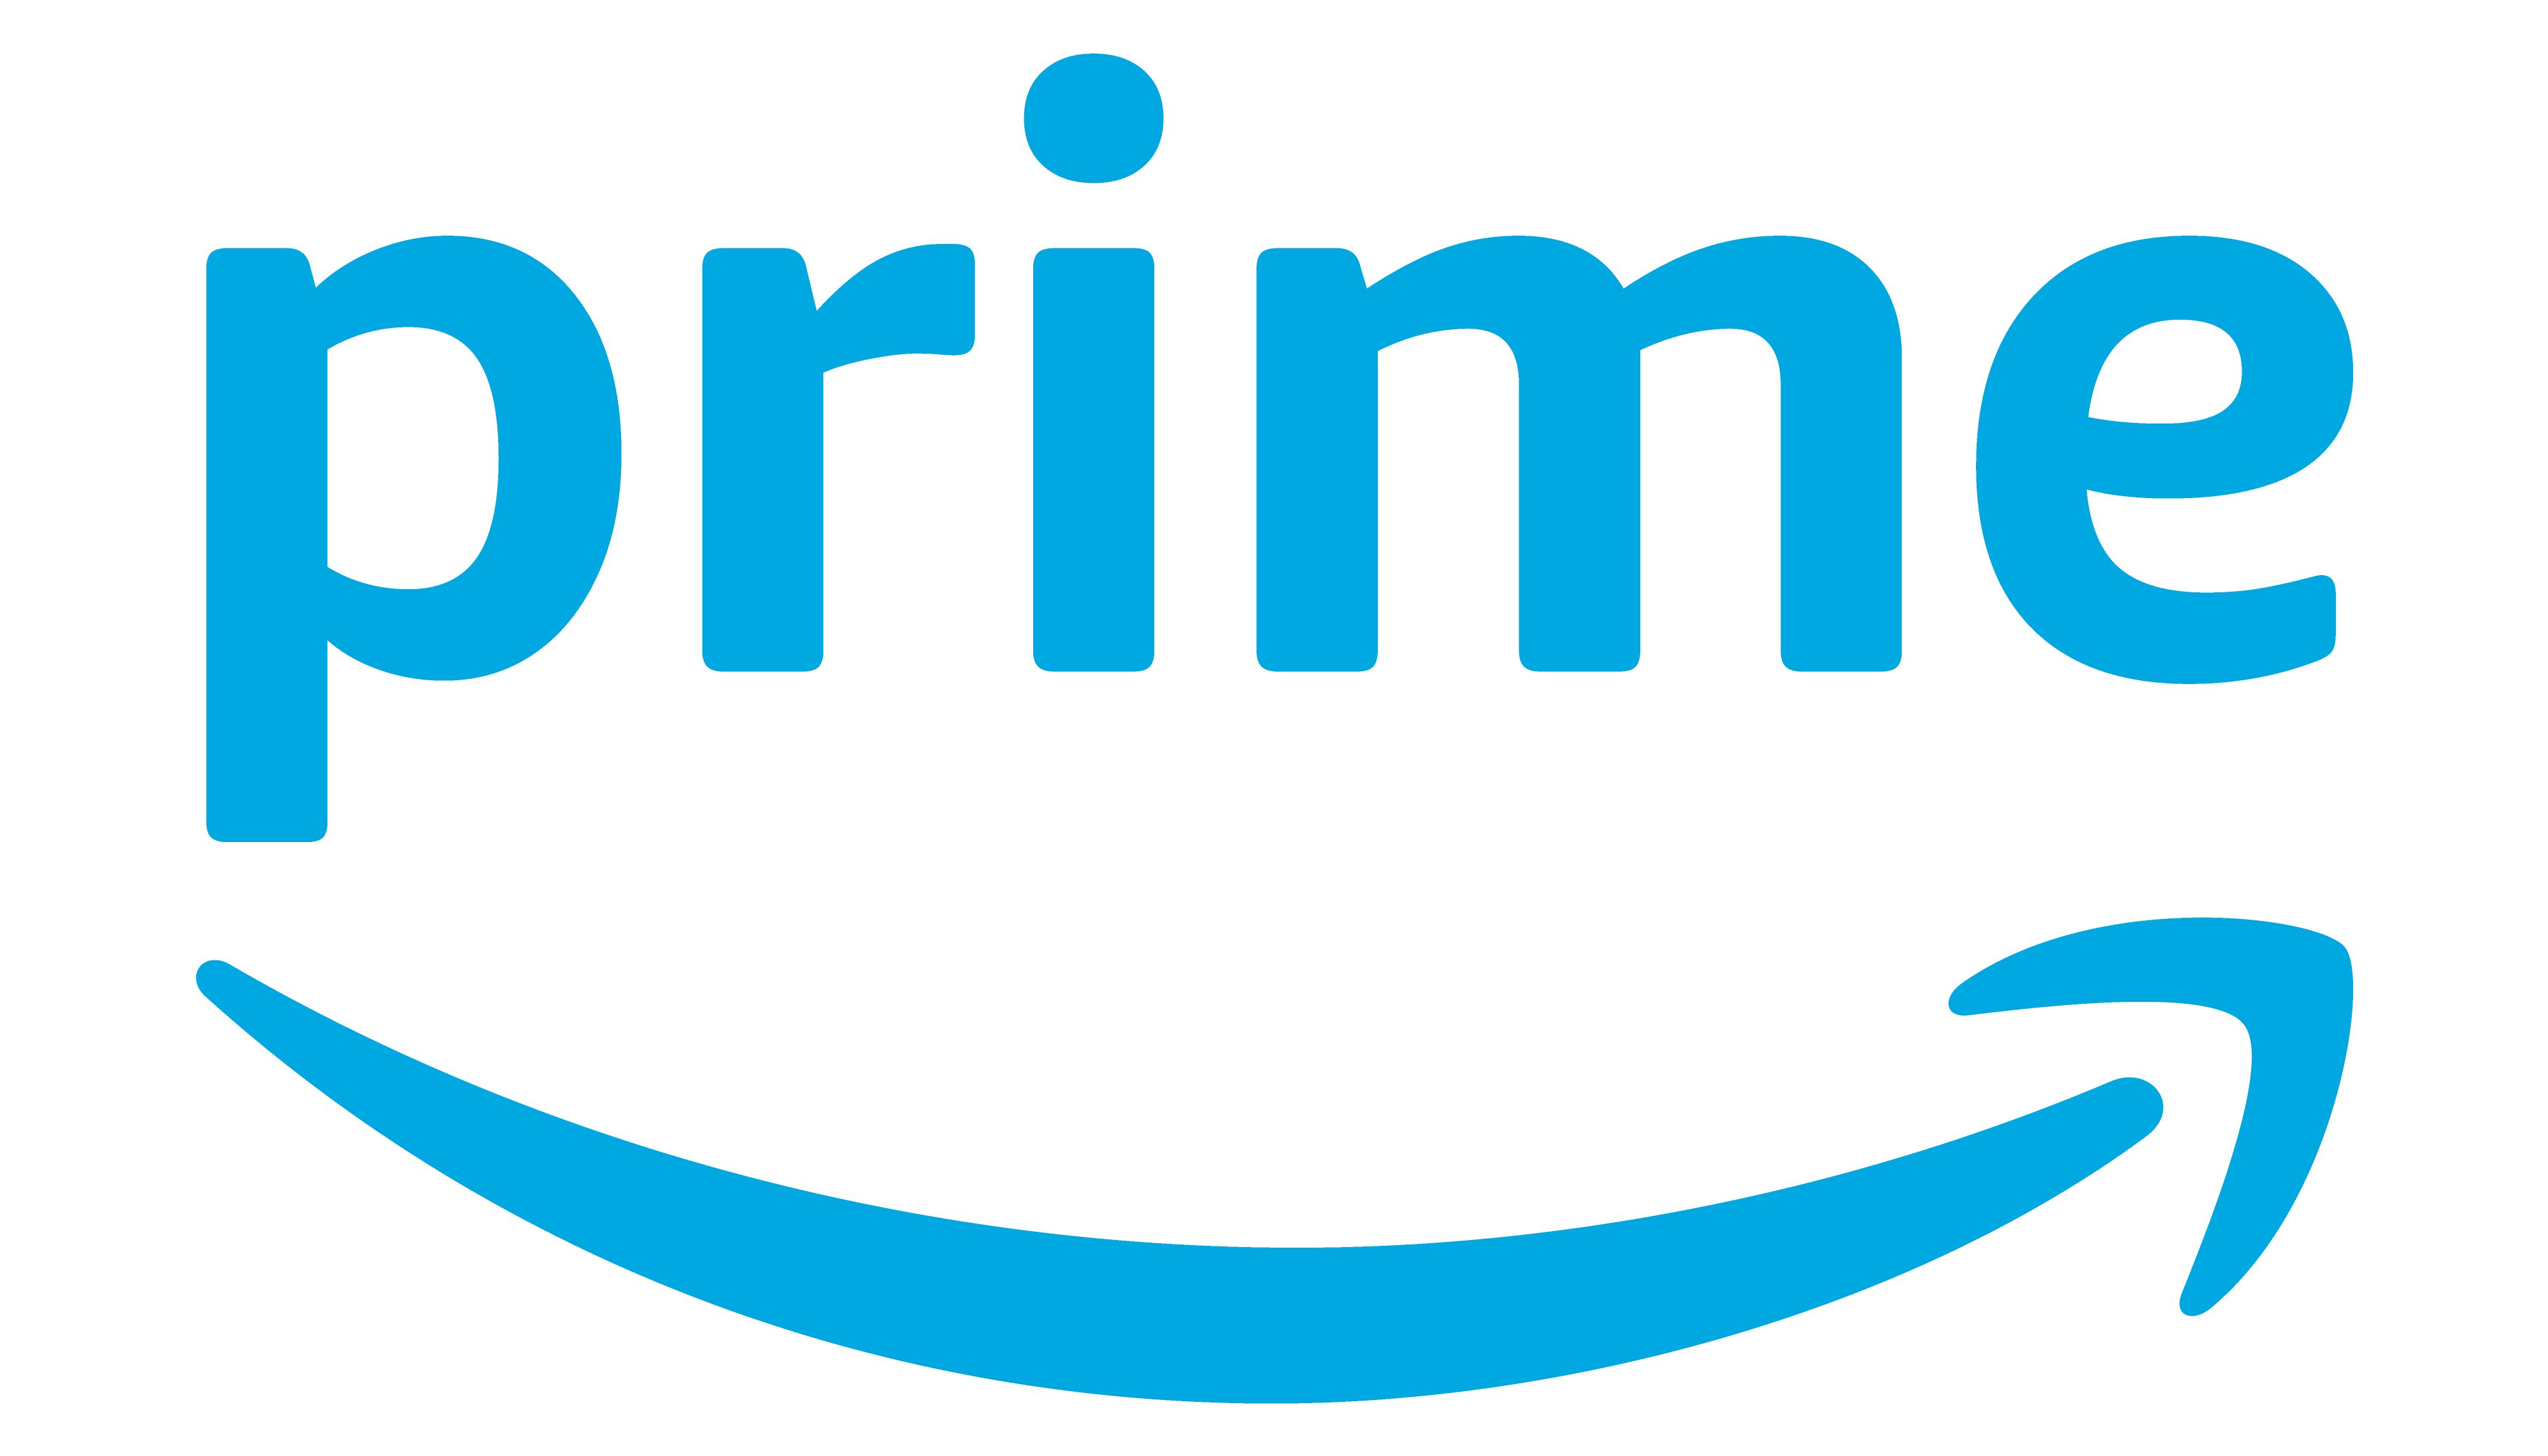 Amazon Prime Air Logo - image and videos. Amazon.com, Inc